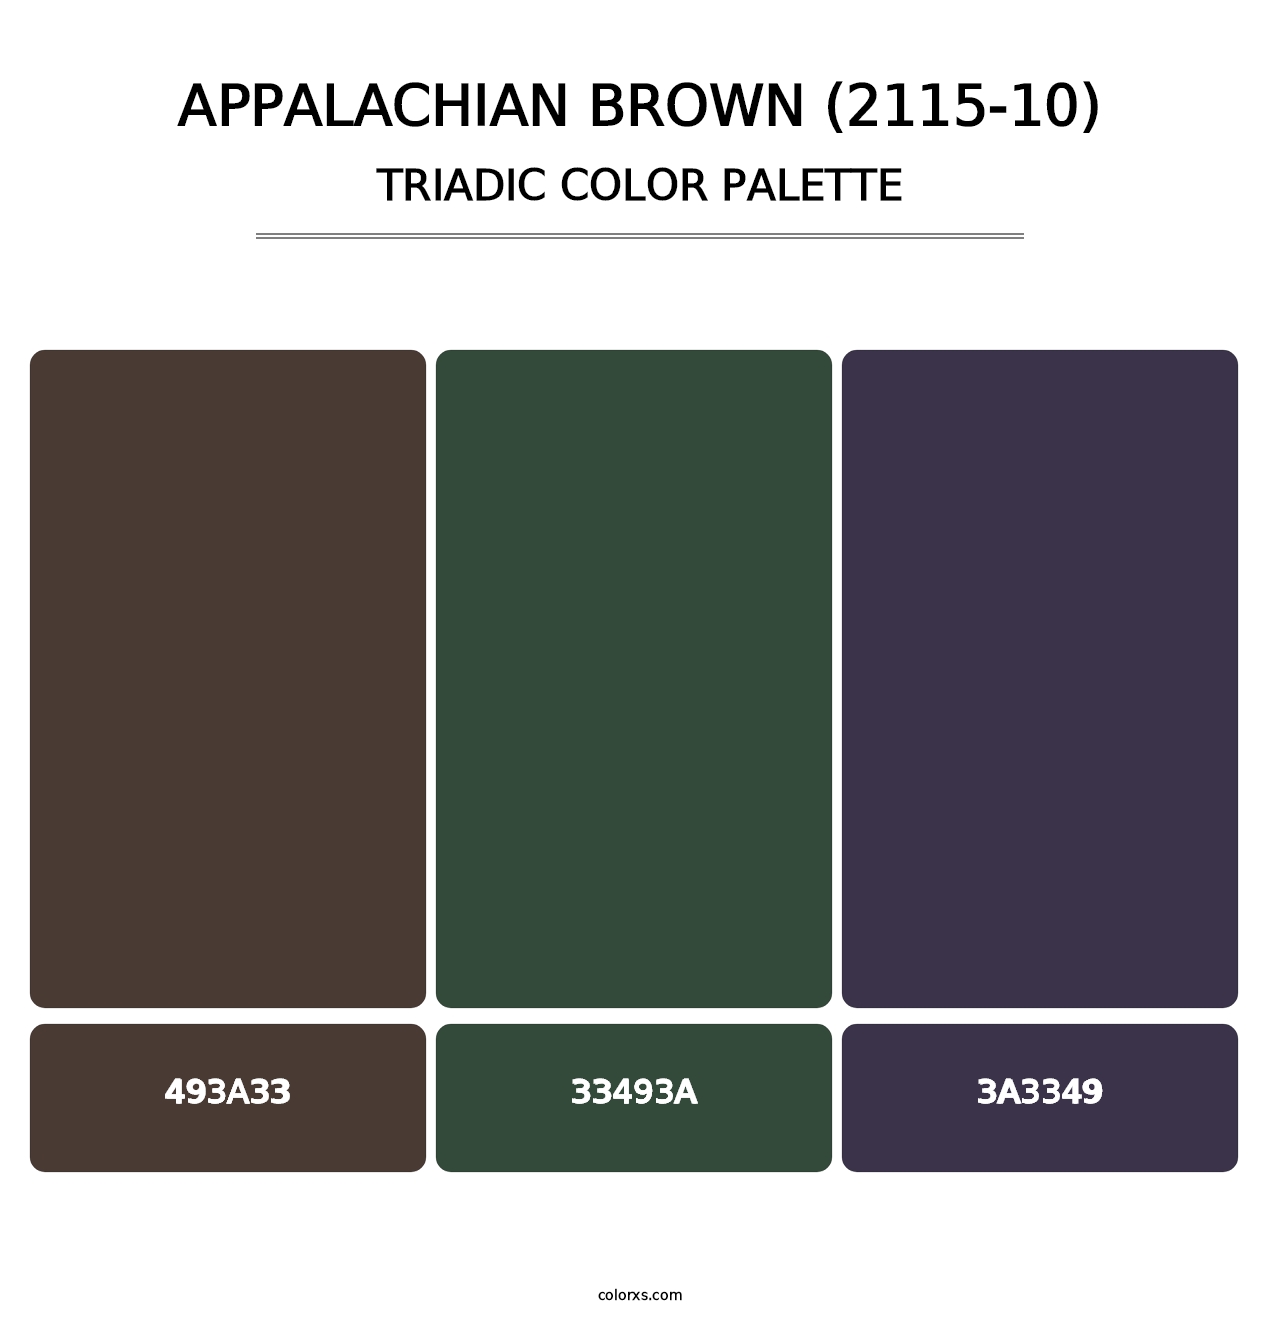 Appalachian Brown (2115-10) - Triadic Color Palette